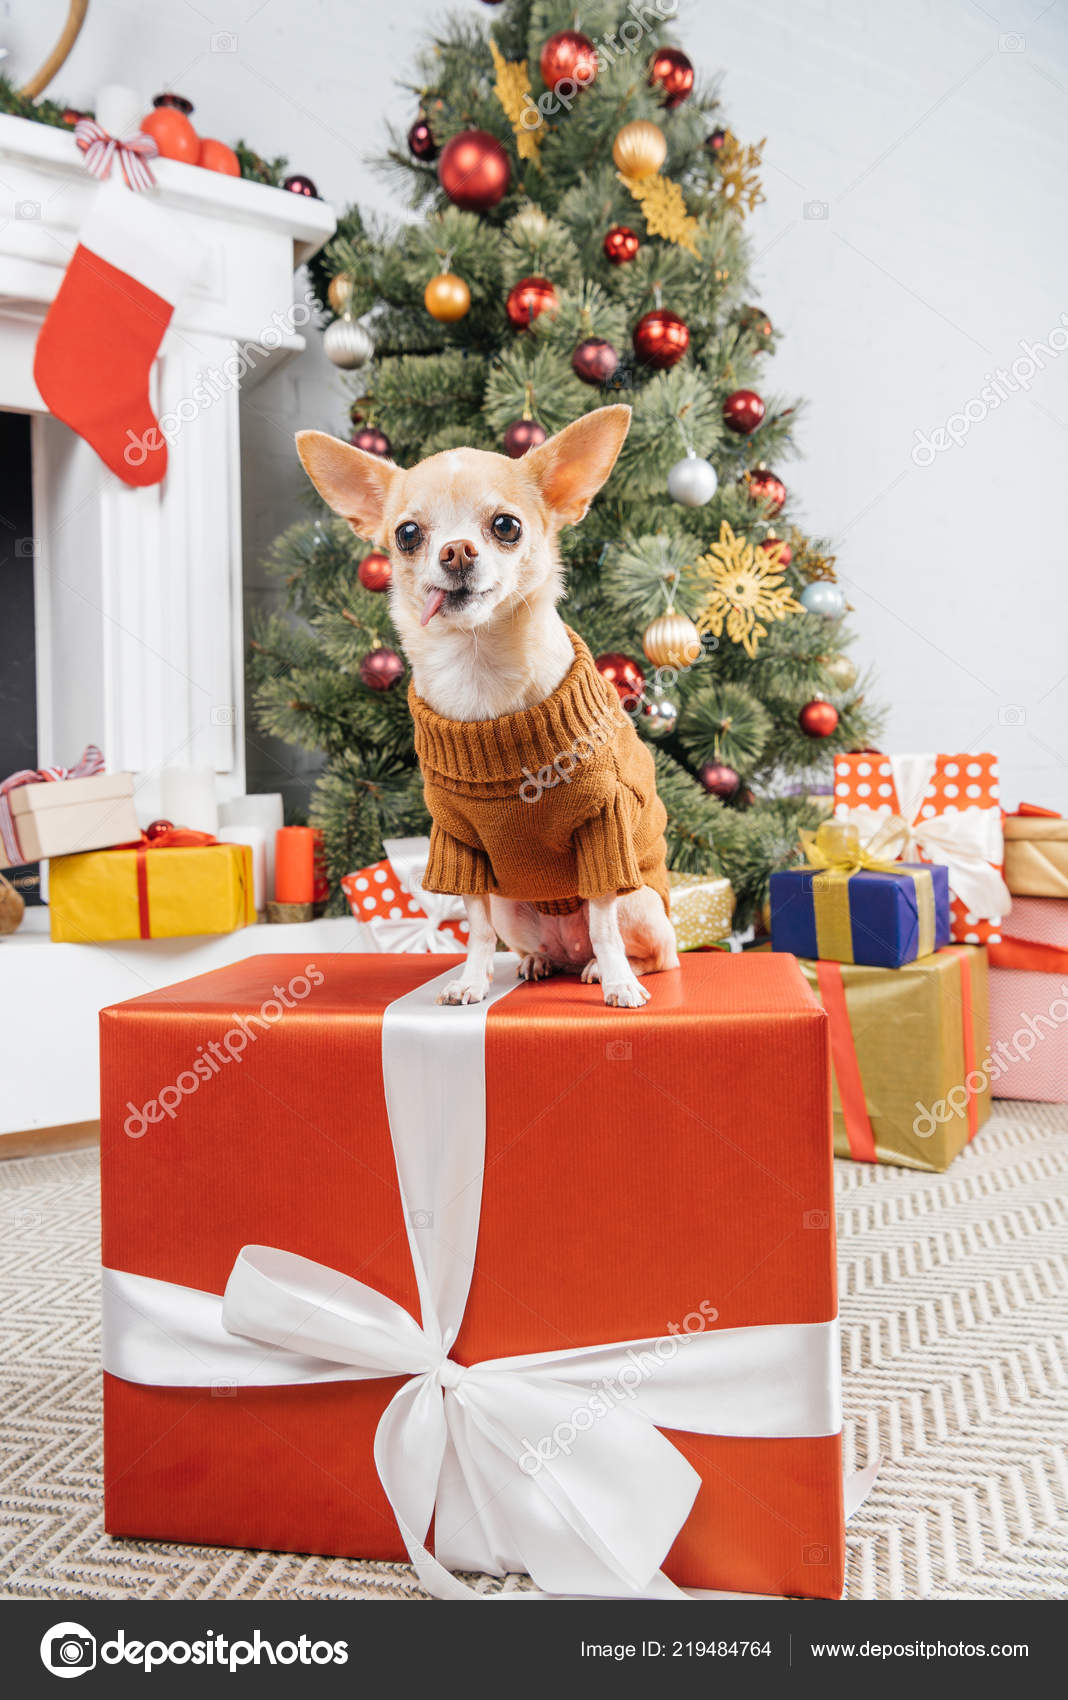 https://st4.depositphotos.com/15827116/21948/i/1600/depositphotos_219484764-stock-photo-close-view-little-chihuahua-dog.jpg